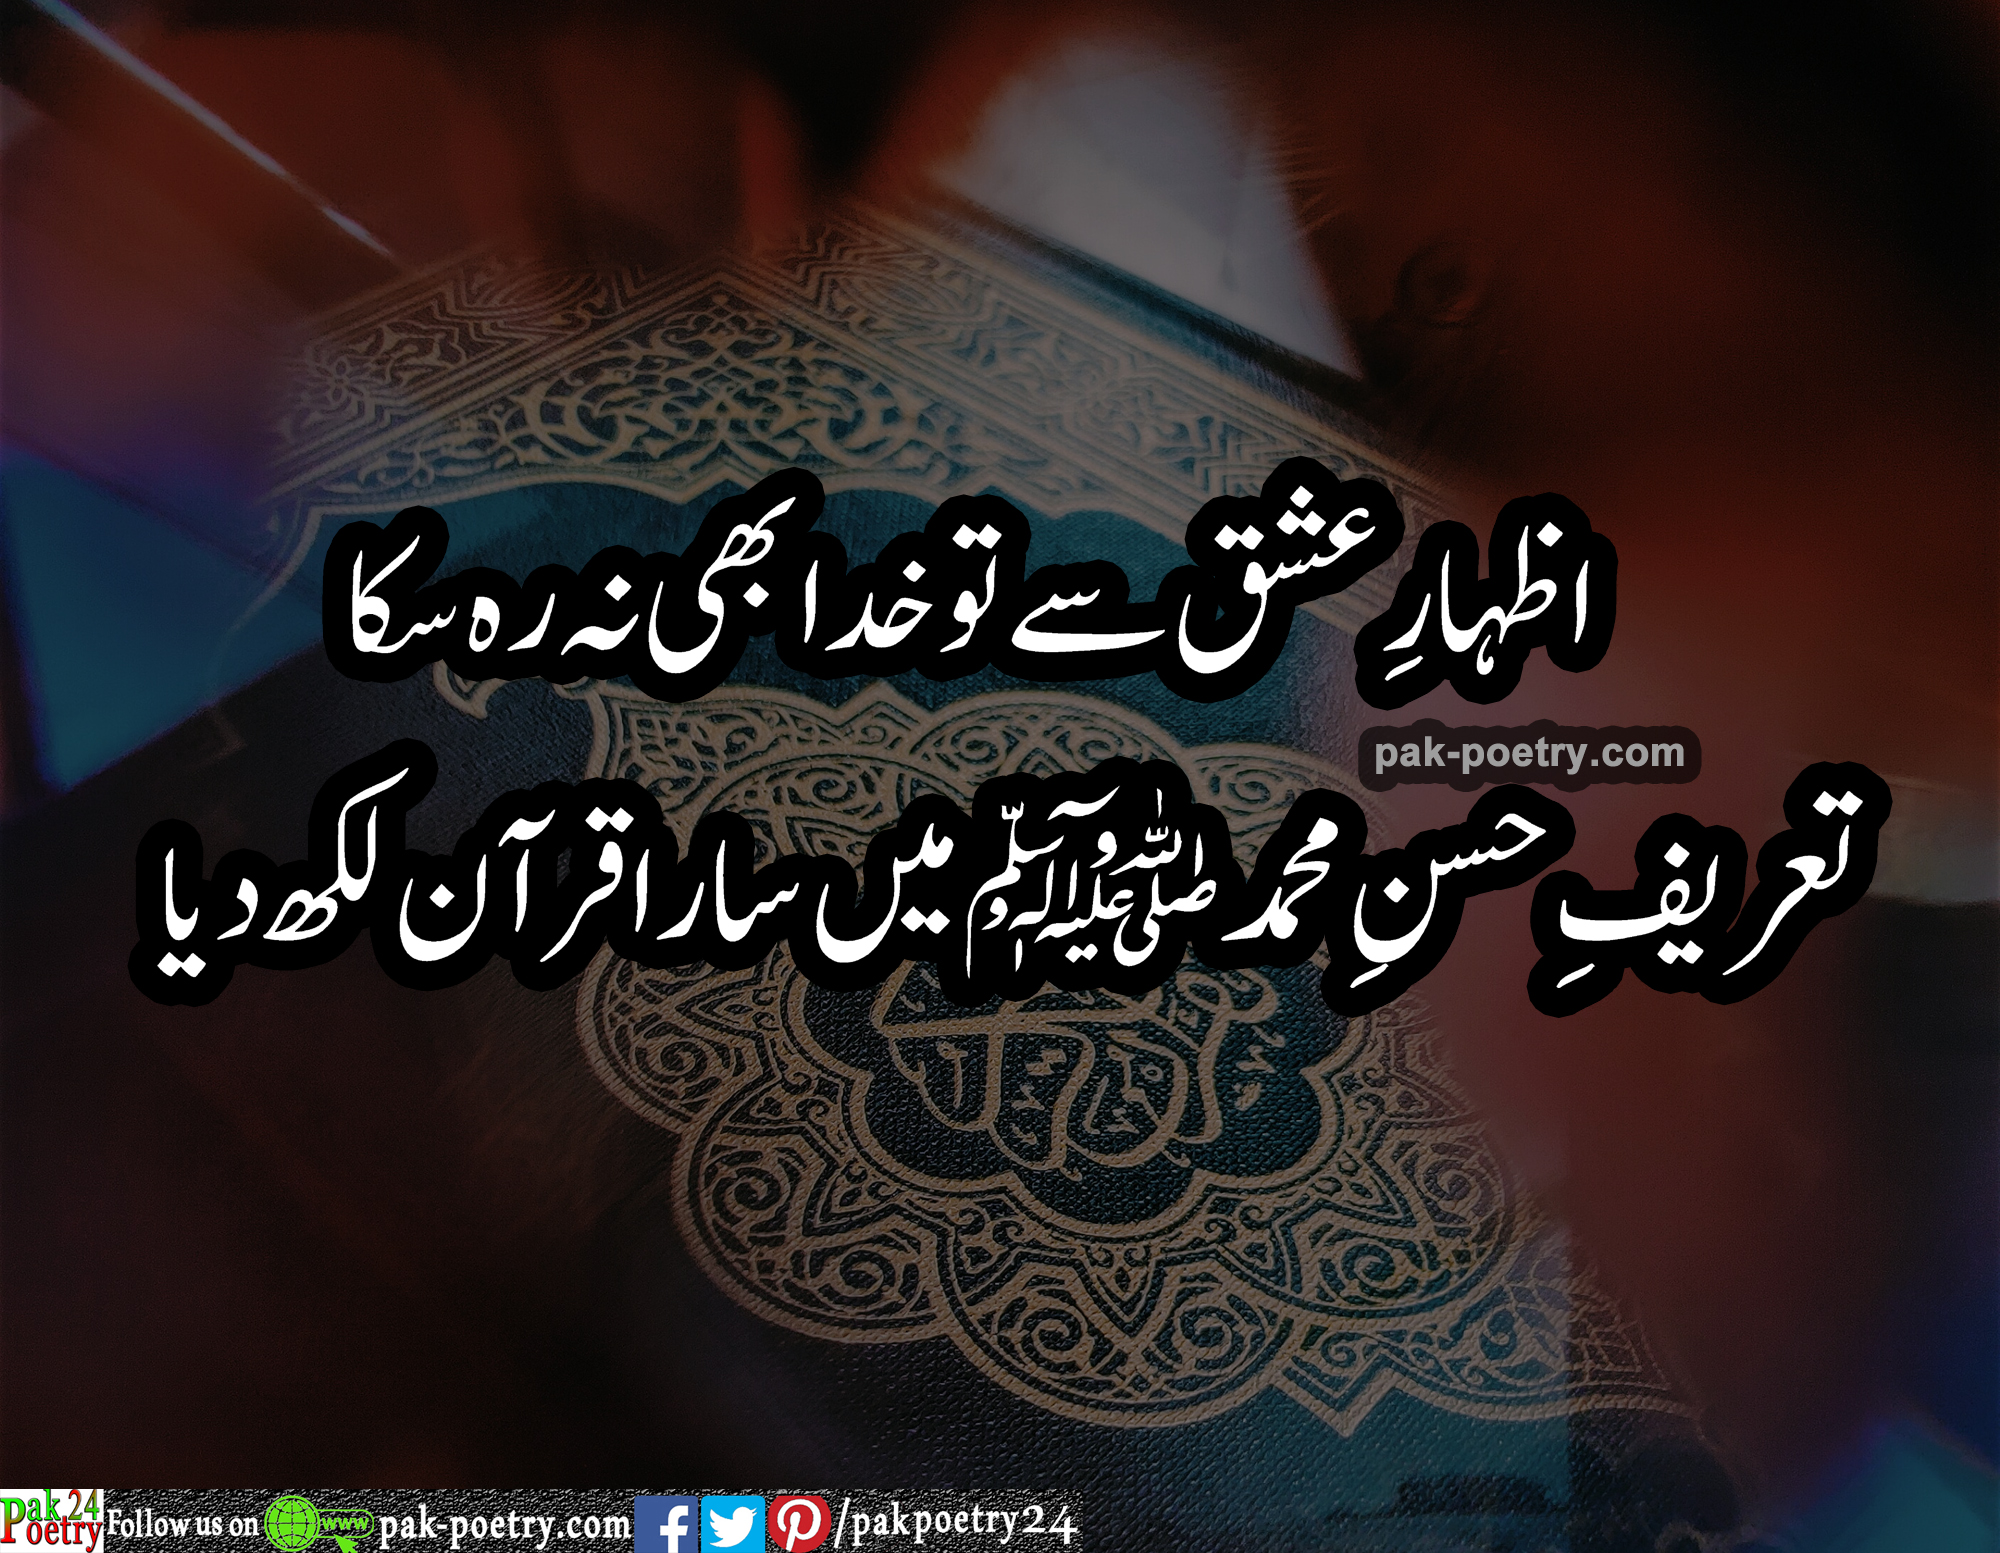 izhary ishqe sy to kuda bee na rhe ska - Poetry on hazrat Muhammad saw in urdu